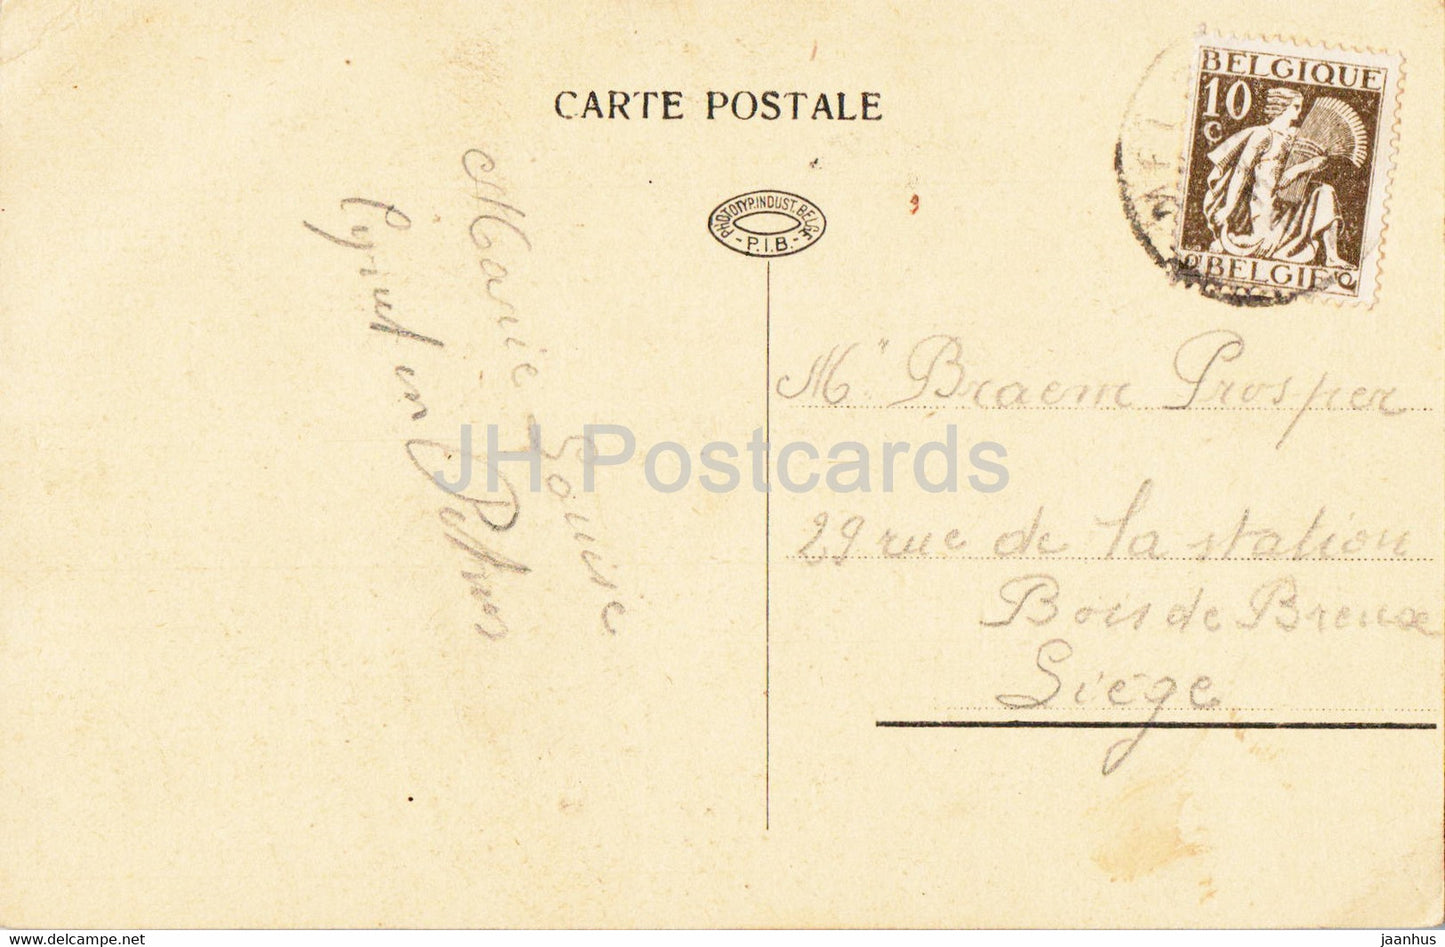 Melsele - Mirakuleuze - Linde van Gaverland - church - old postcard - Belgium - used